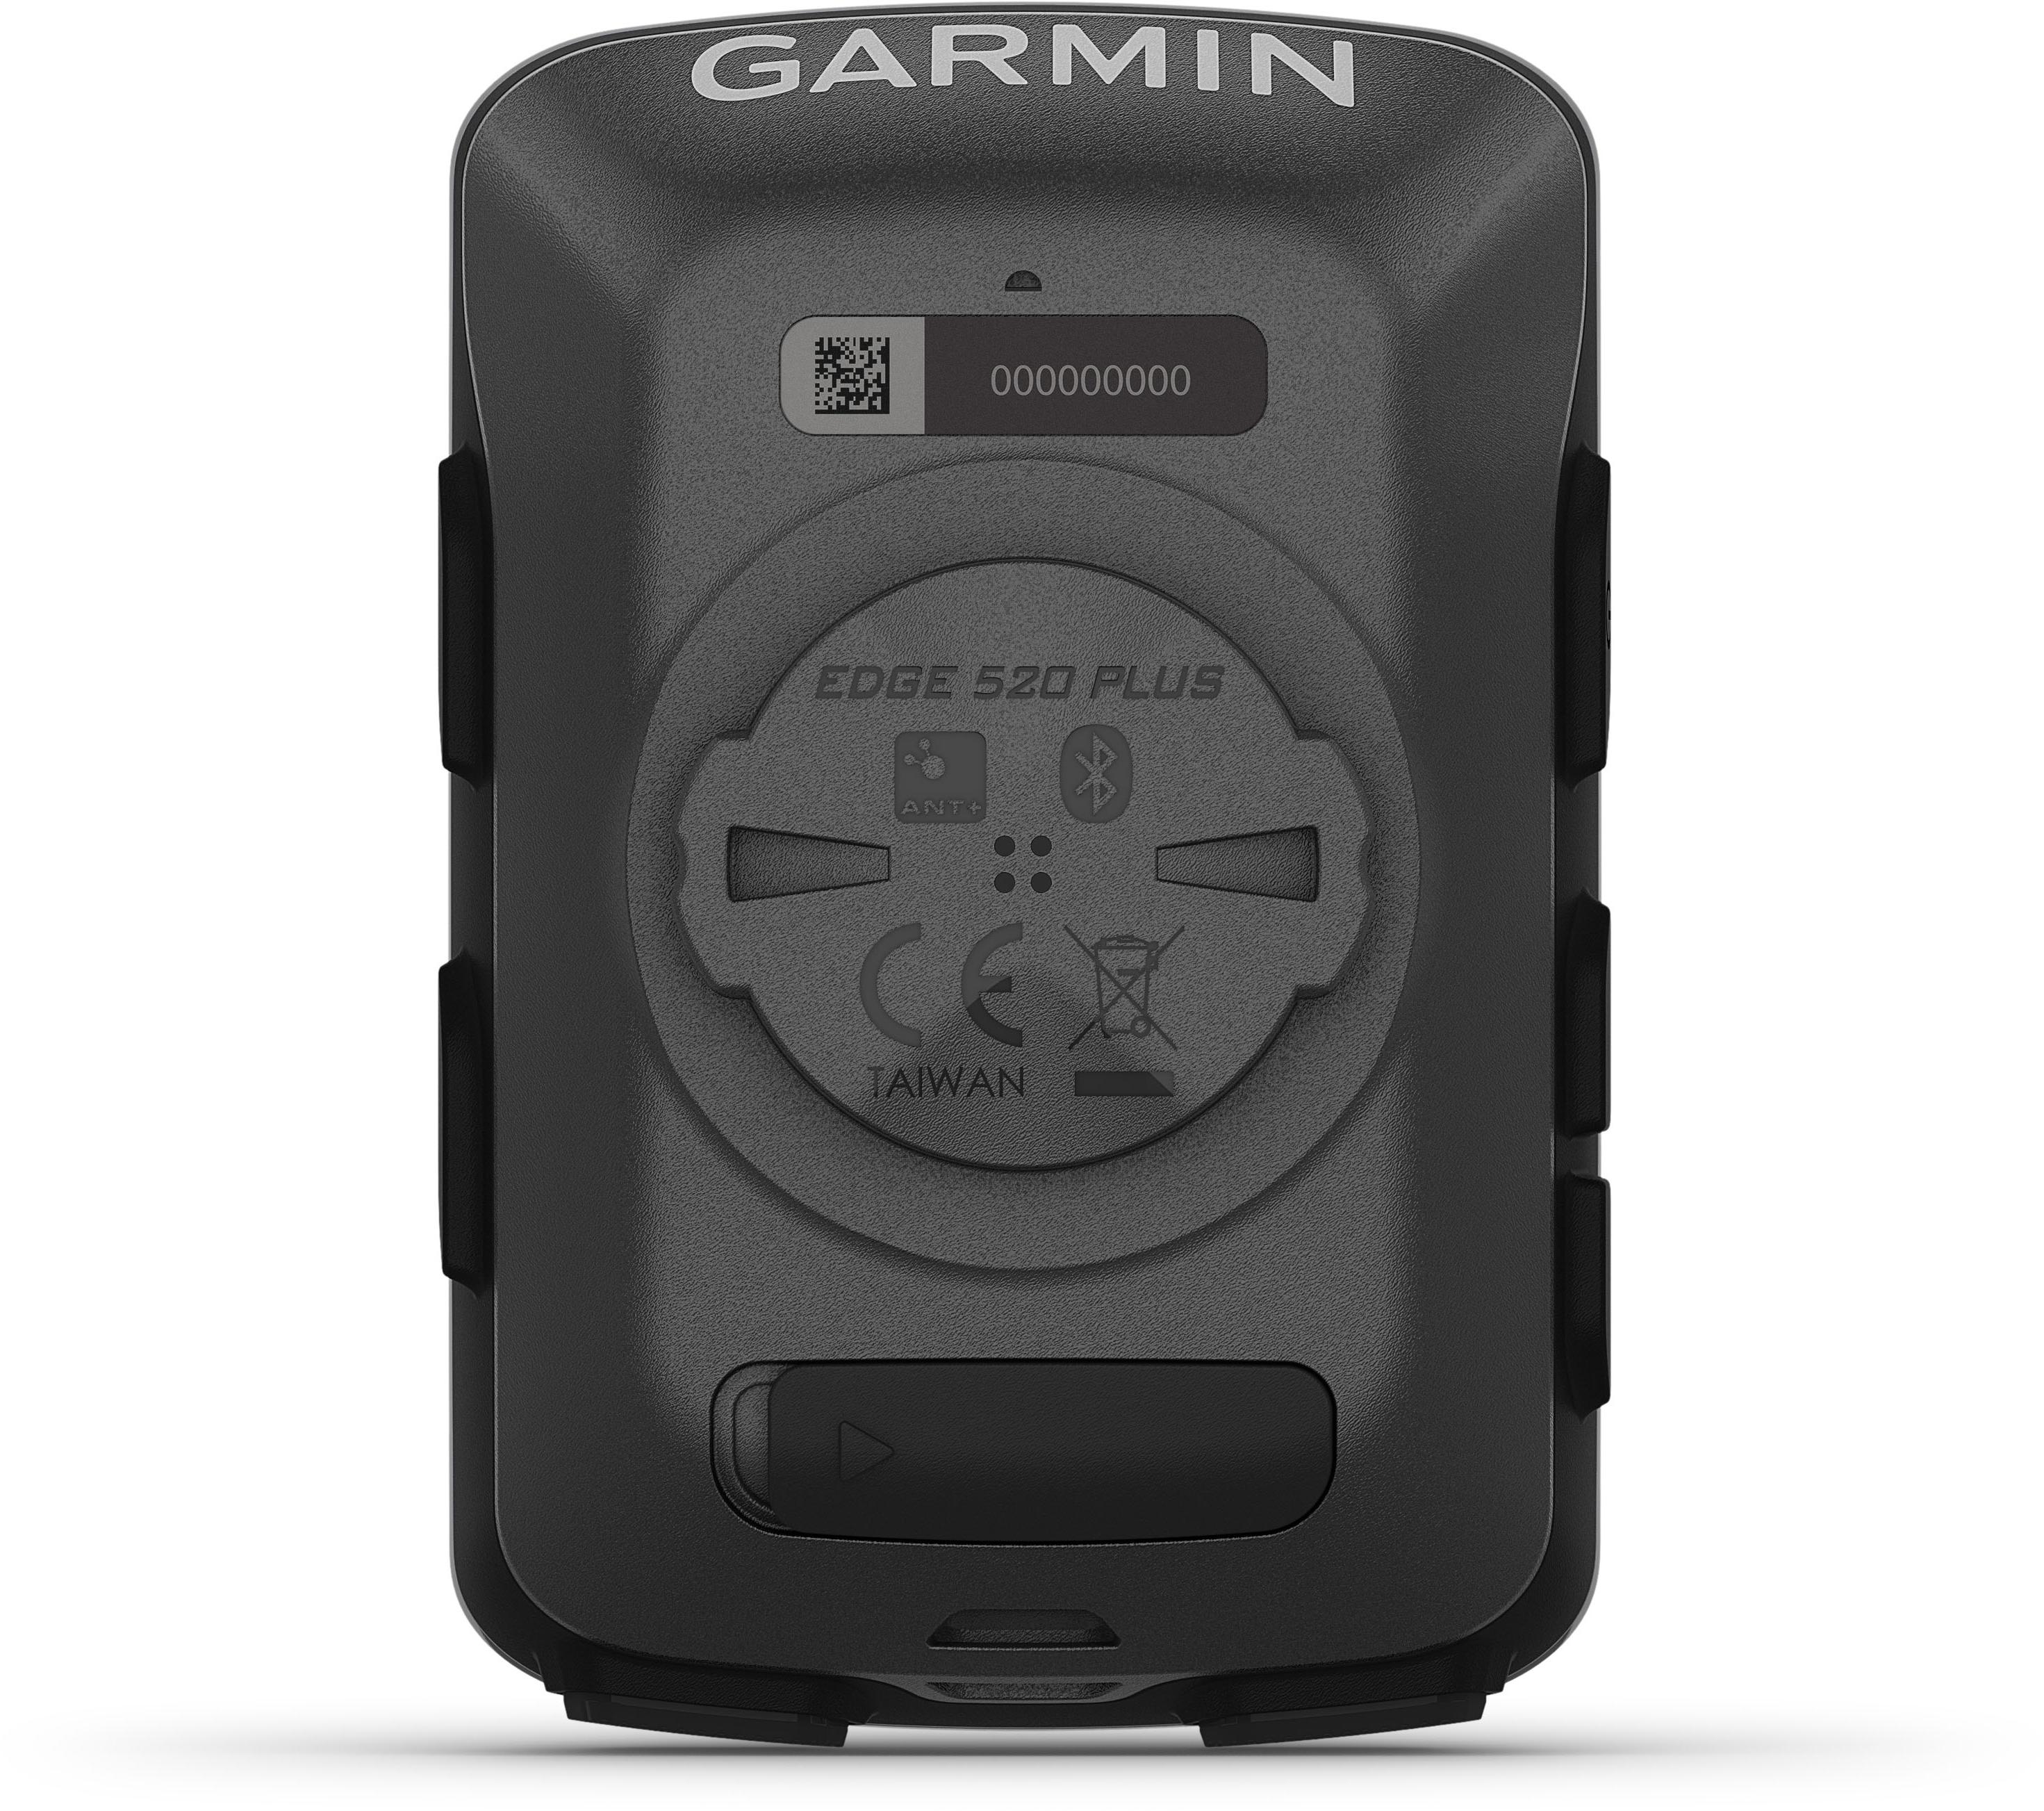 garmin edge 520 plus compatible heart rate monitor